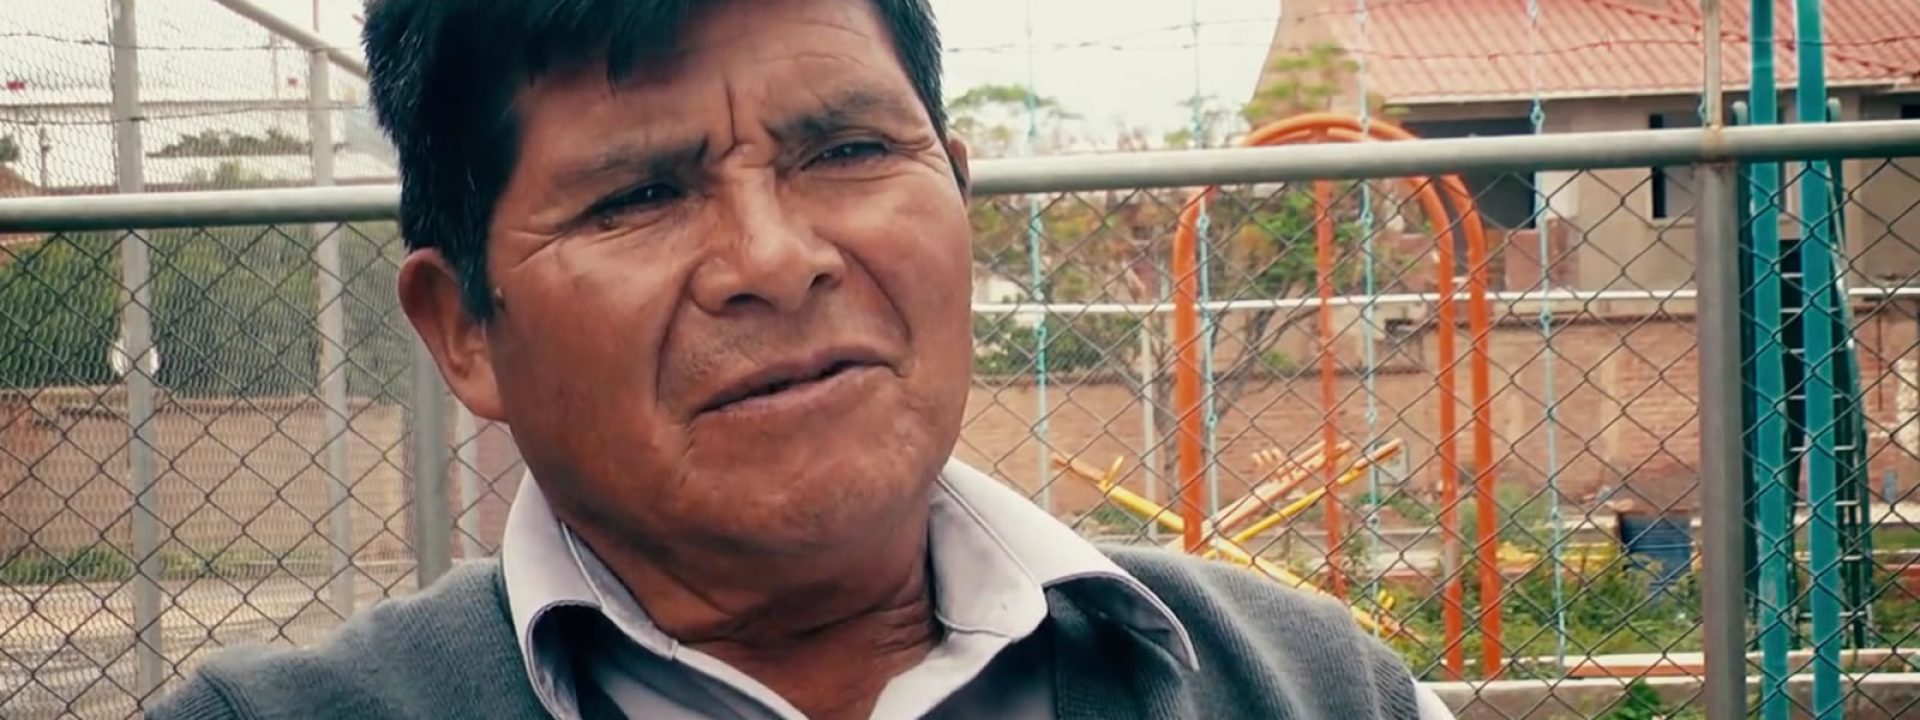 La Bolivia resiliente, un ejemplo para superar la crisis del agua